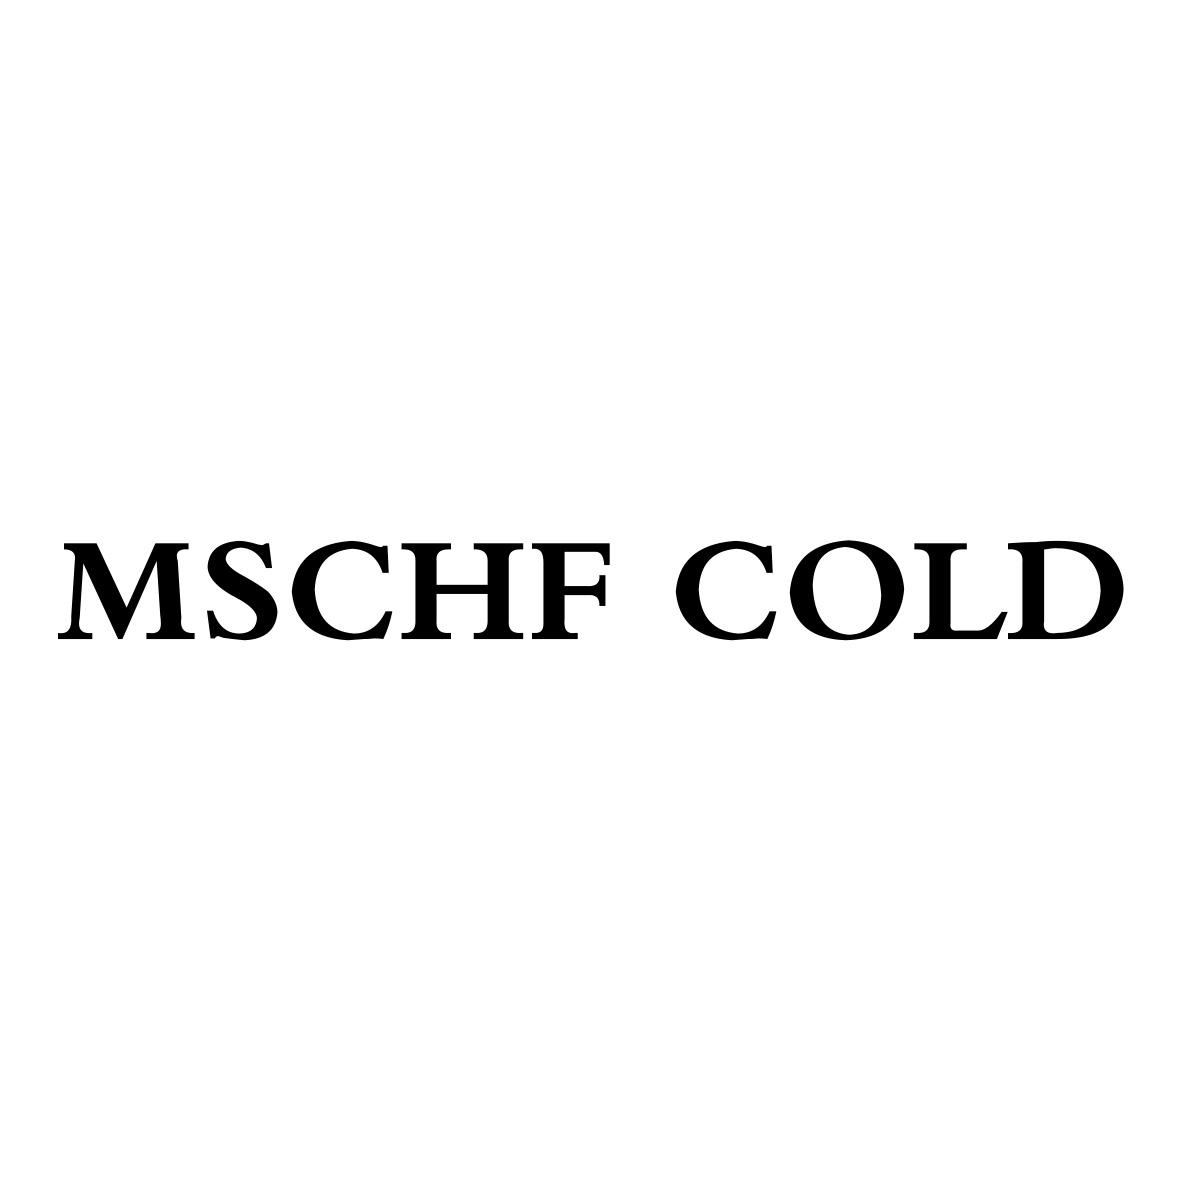 MSCHF COLD